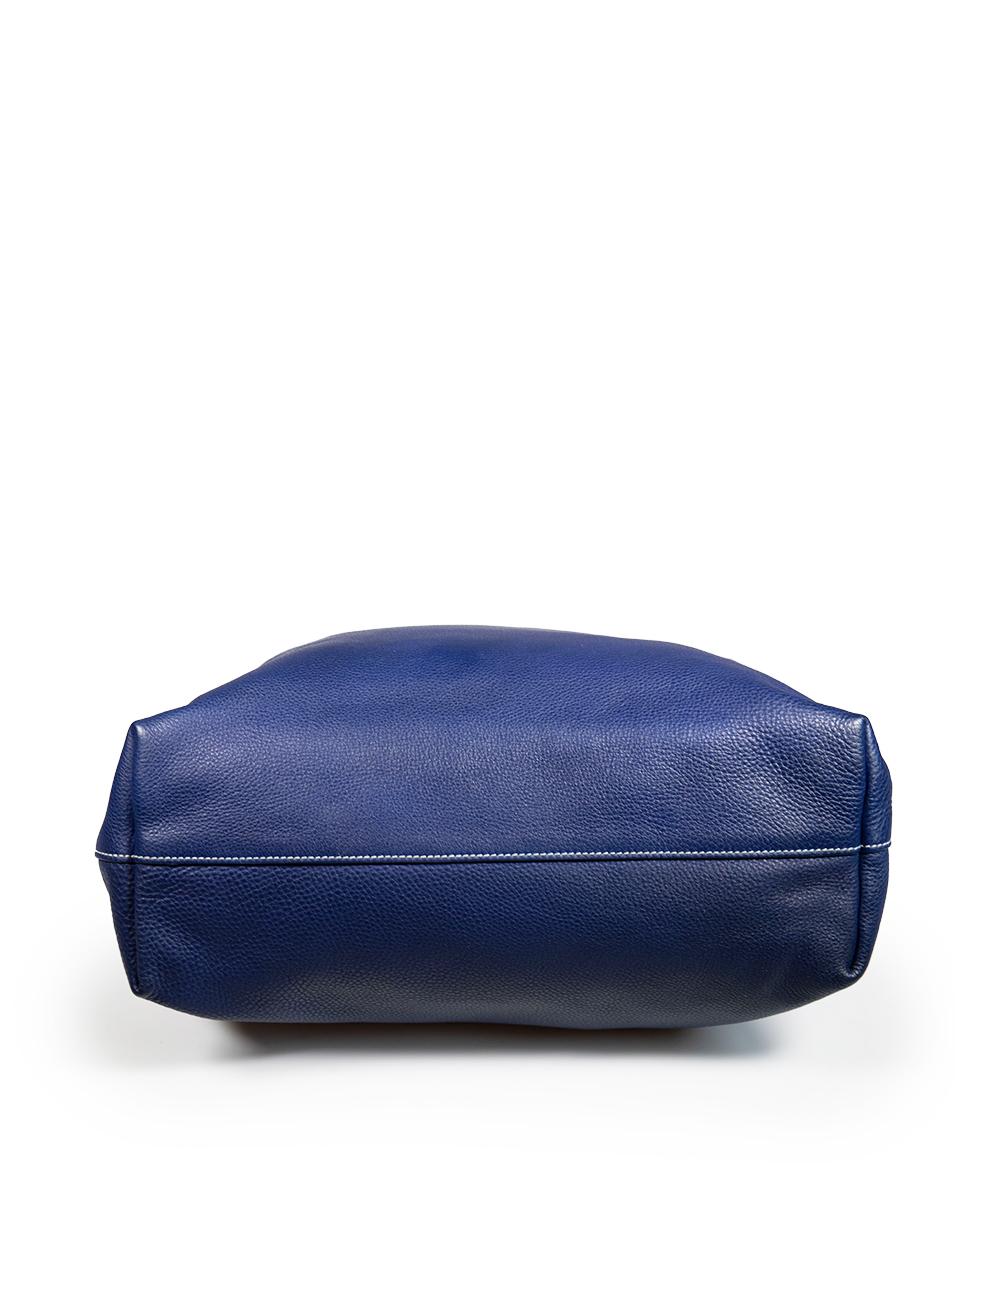 Women's Prada Blue Leather Vitello Daino Medium Tote For Sale